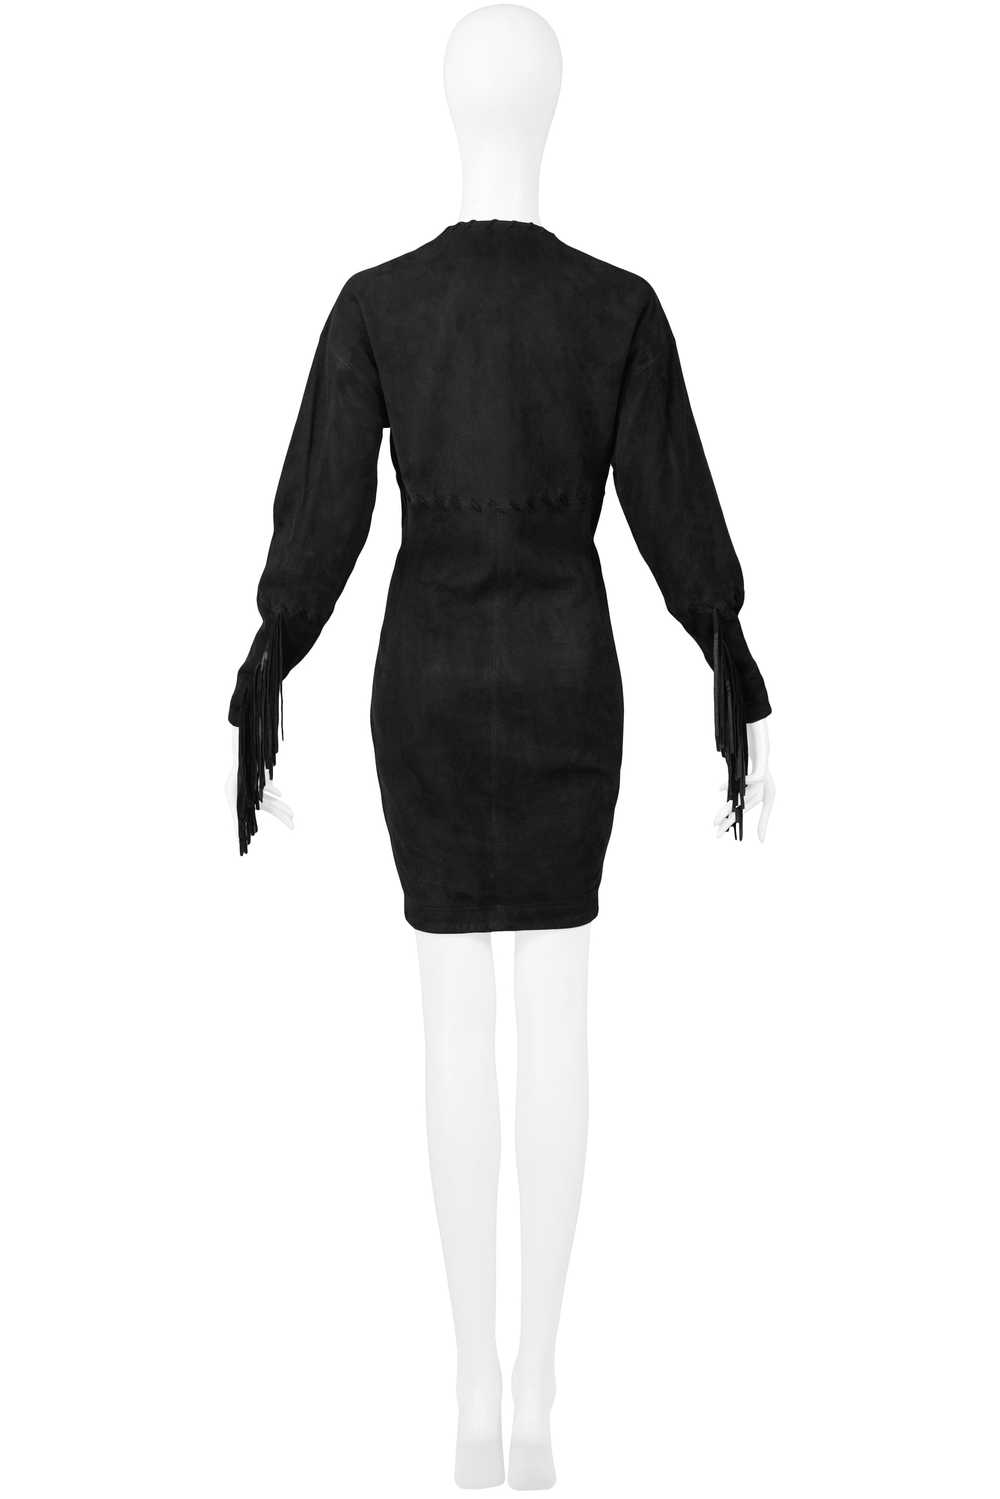 ISAAC MIZRAHI BLACK LEATHER SUEDE DRESS 1989 - image 2